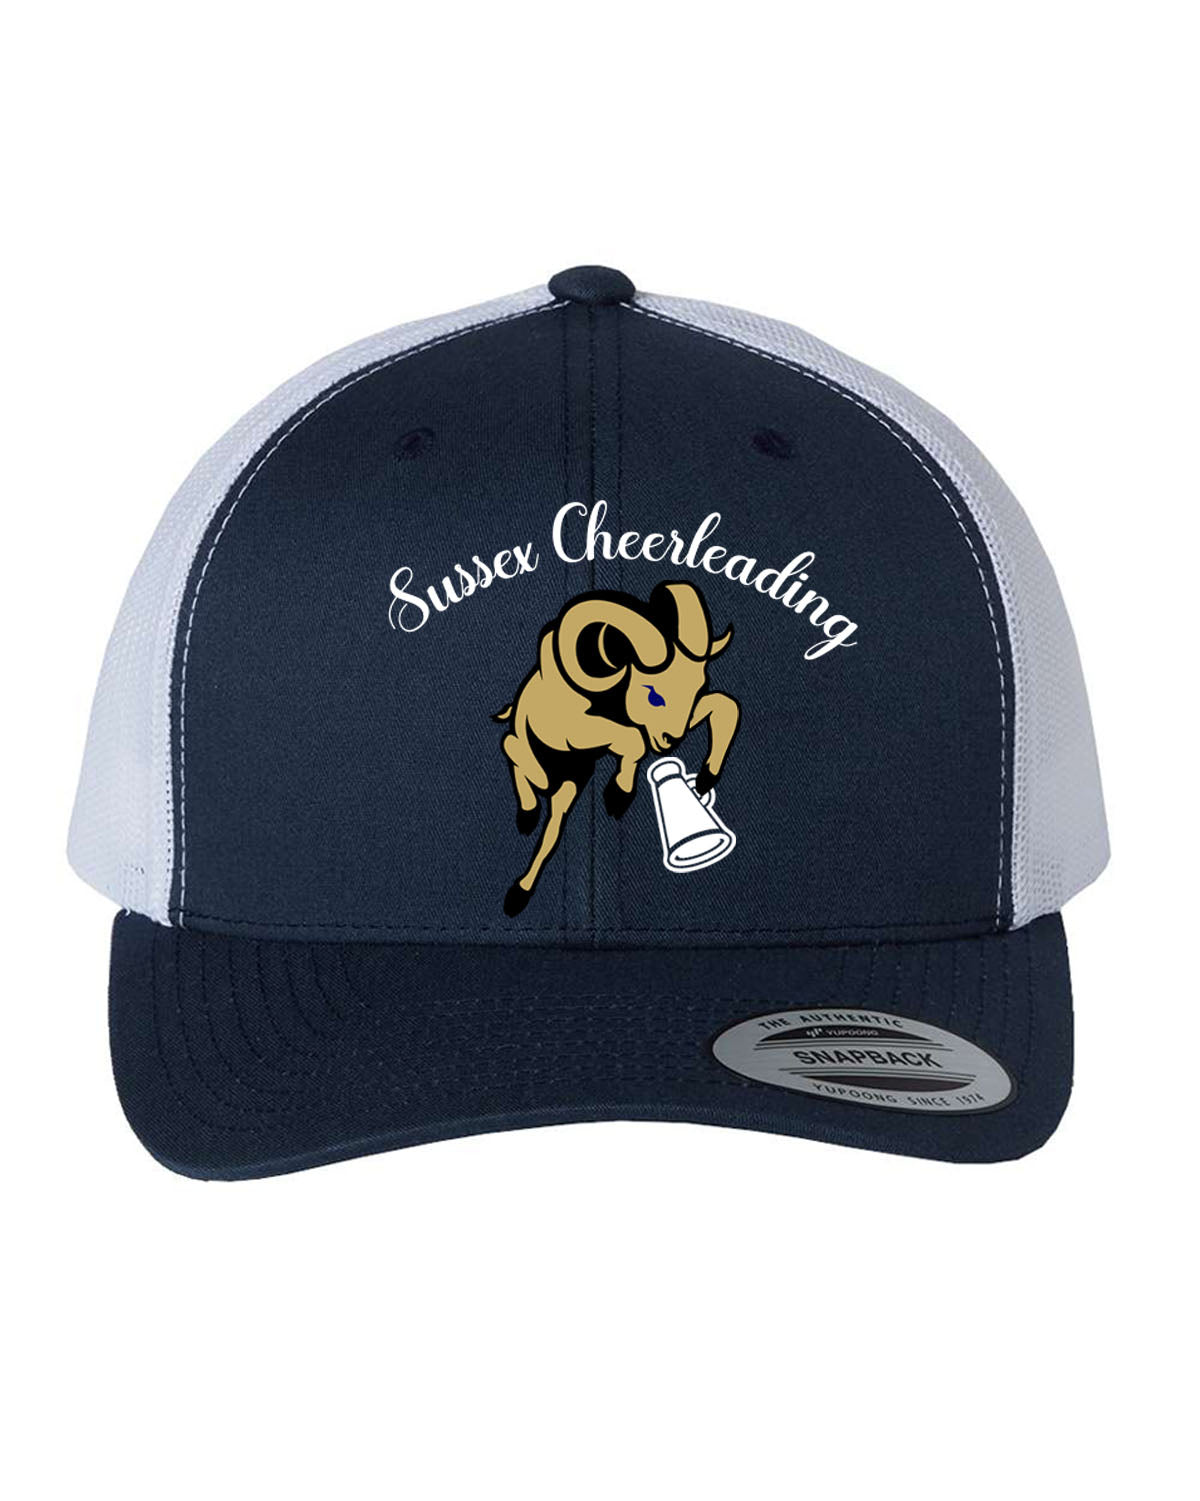 Sussex Middle Cheer Design 3 Trucker Hat